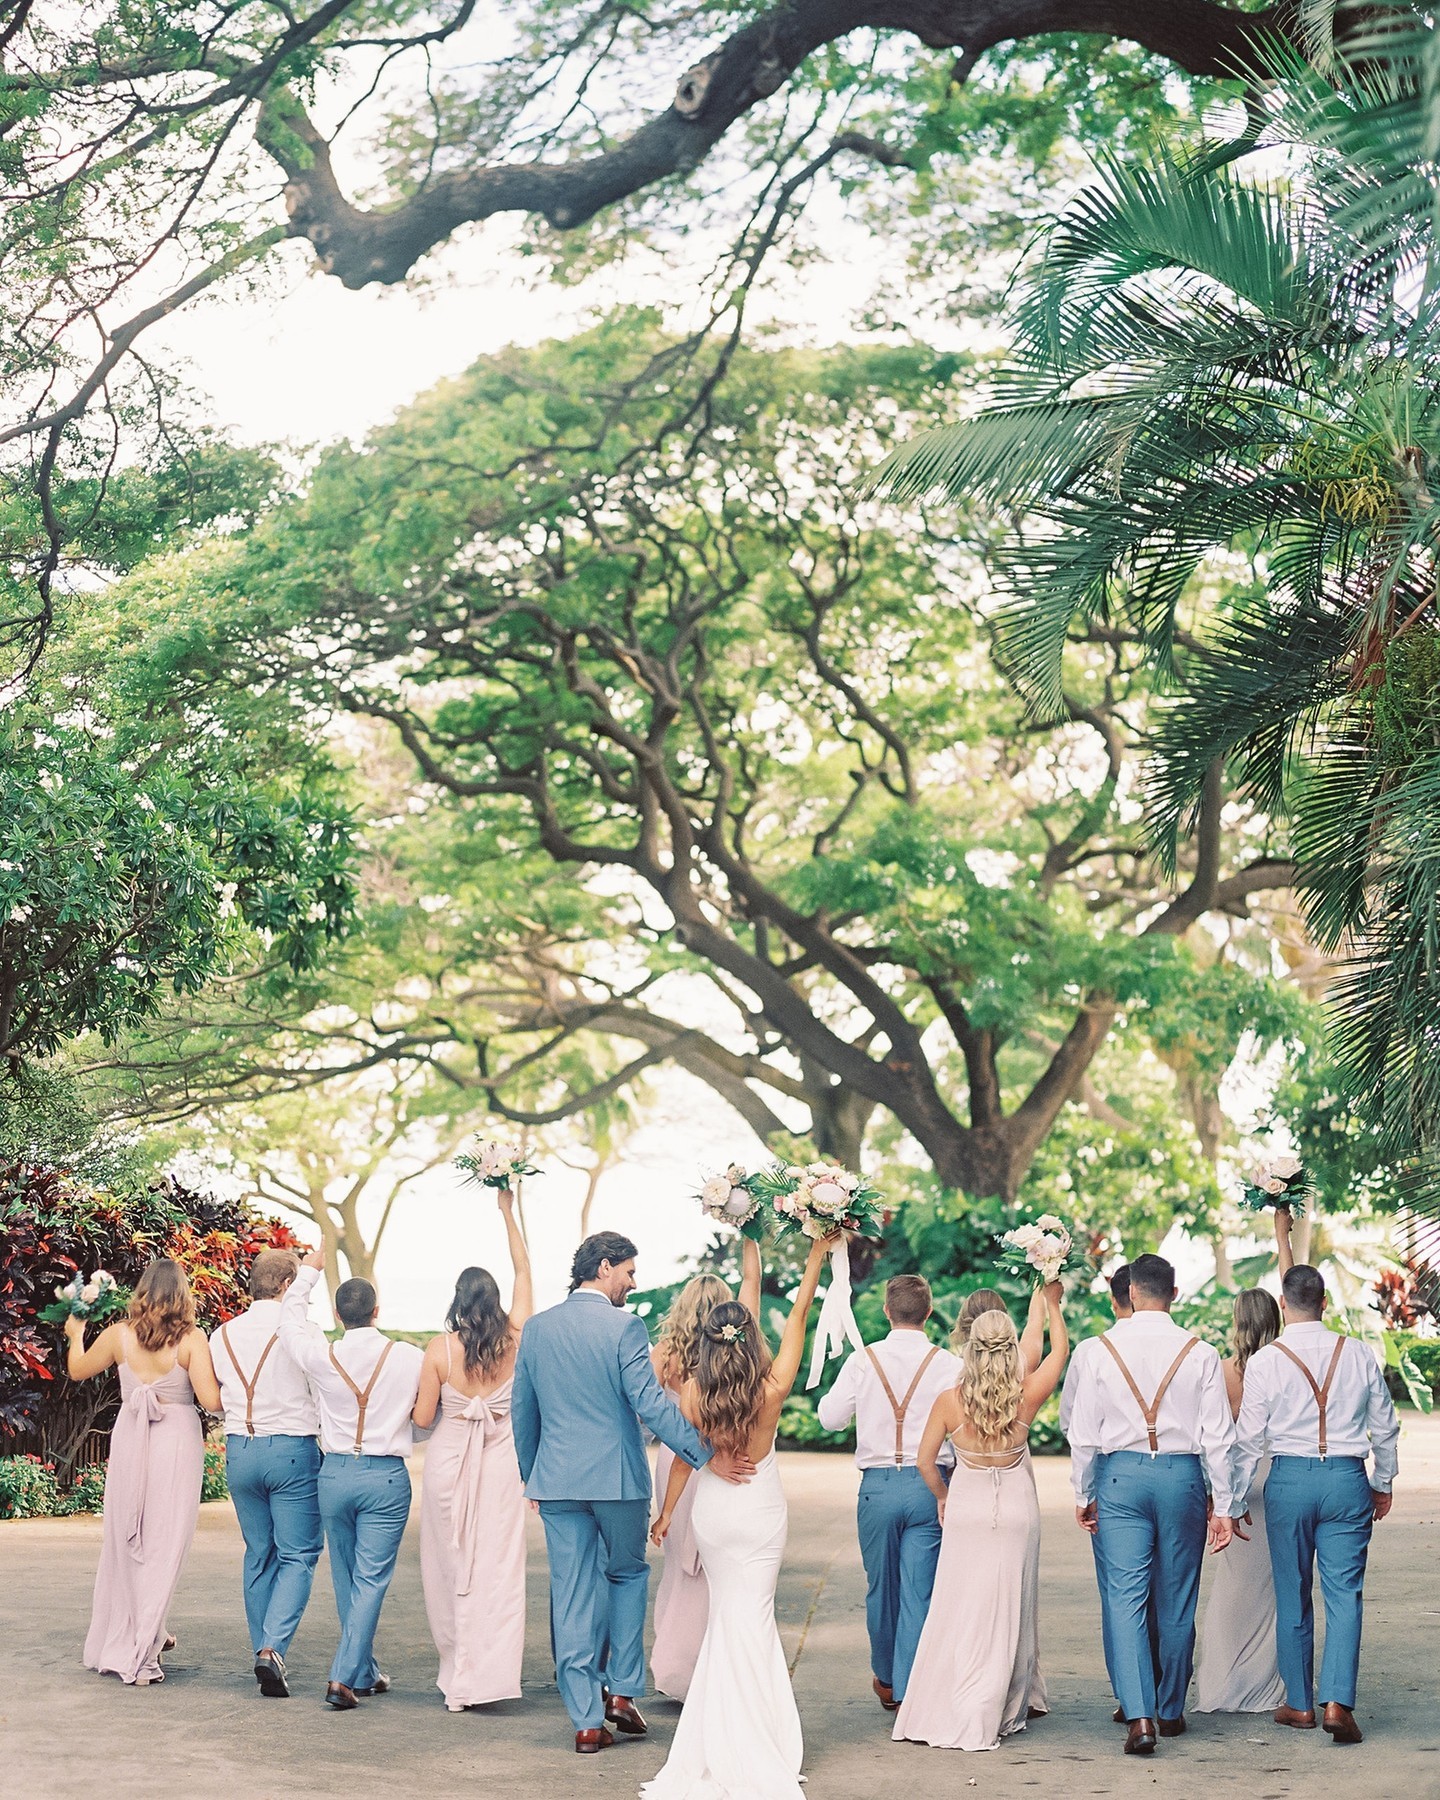 It’s Wedding Season!
PC: Dmitri and Sandra Photography 
•
•
•
•
•
•
•
#mauiweddingplanner #hawaiiweddingplanner #destinationweddingplanner #wedding #weddingparty #bridesmaid #groomsmen #weddingseason #weddingflowers #weddingday